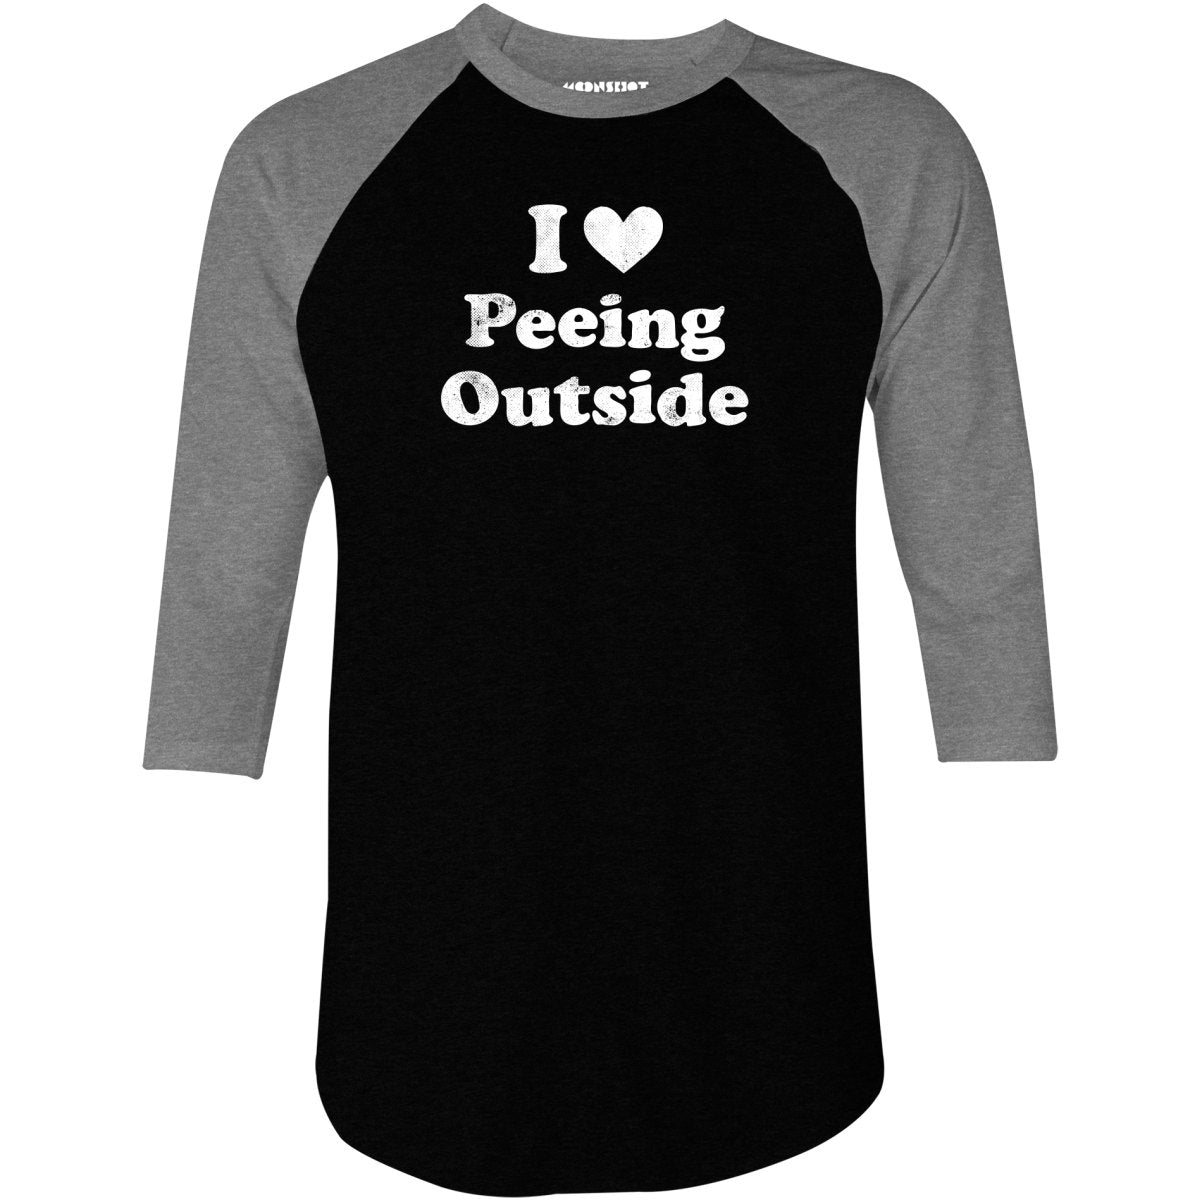 I Love Peeing Outside 34 Sleeve Raglan T Shirt M00nshot 